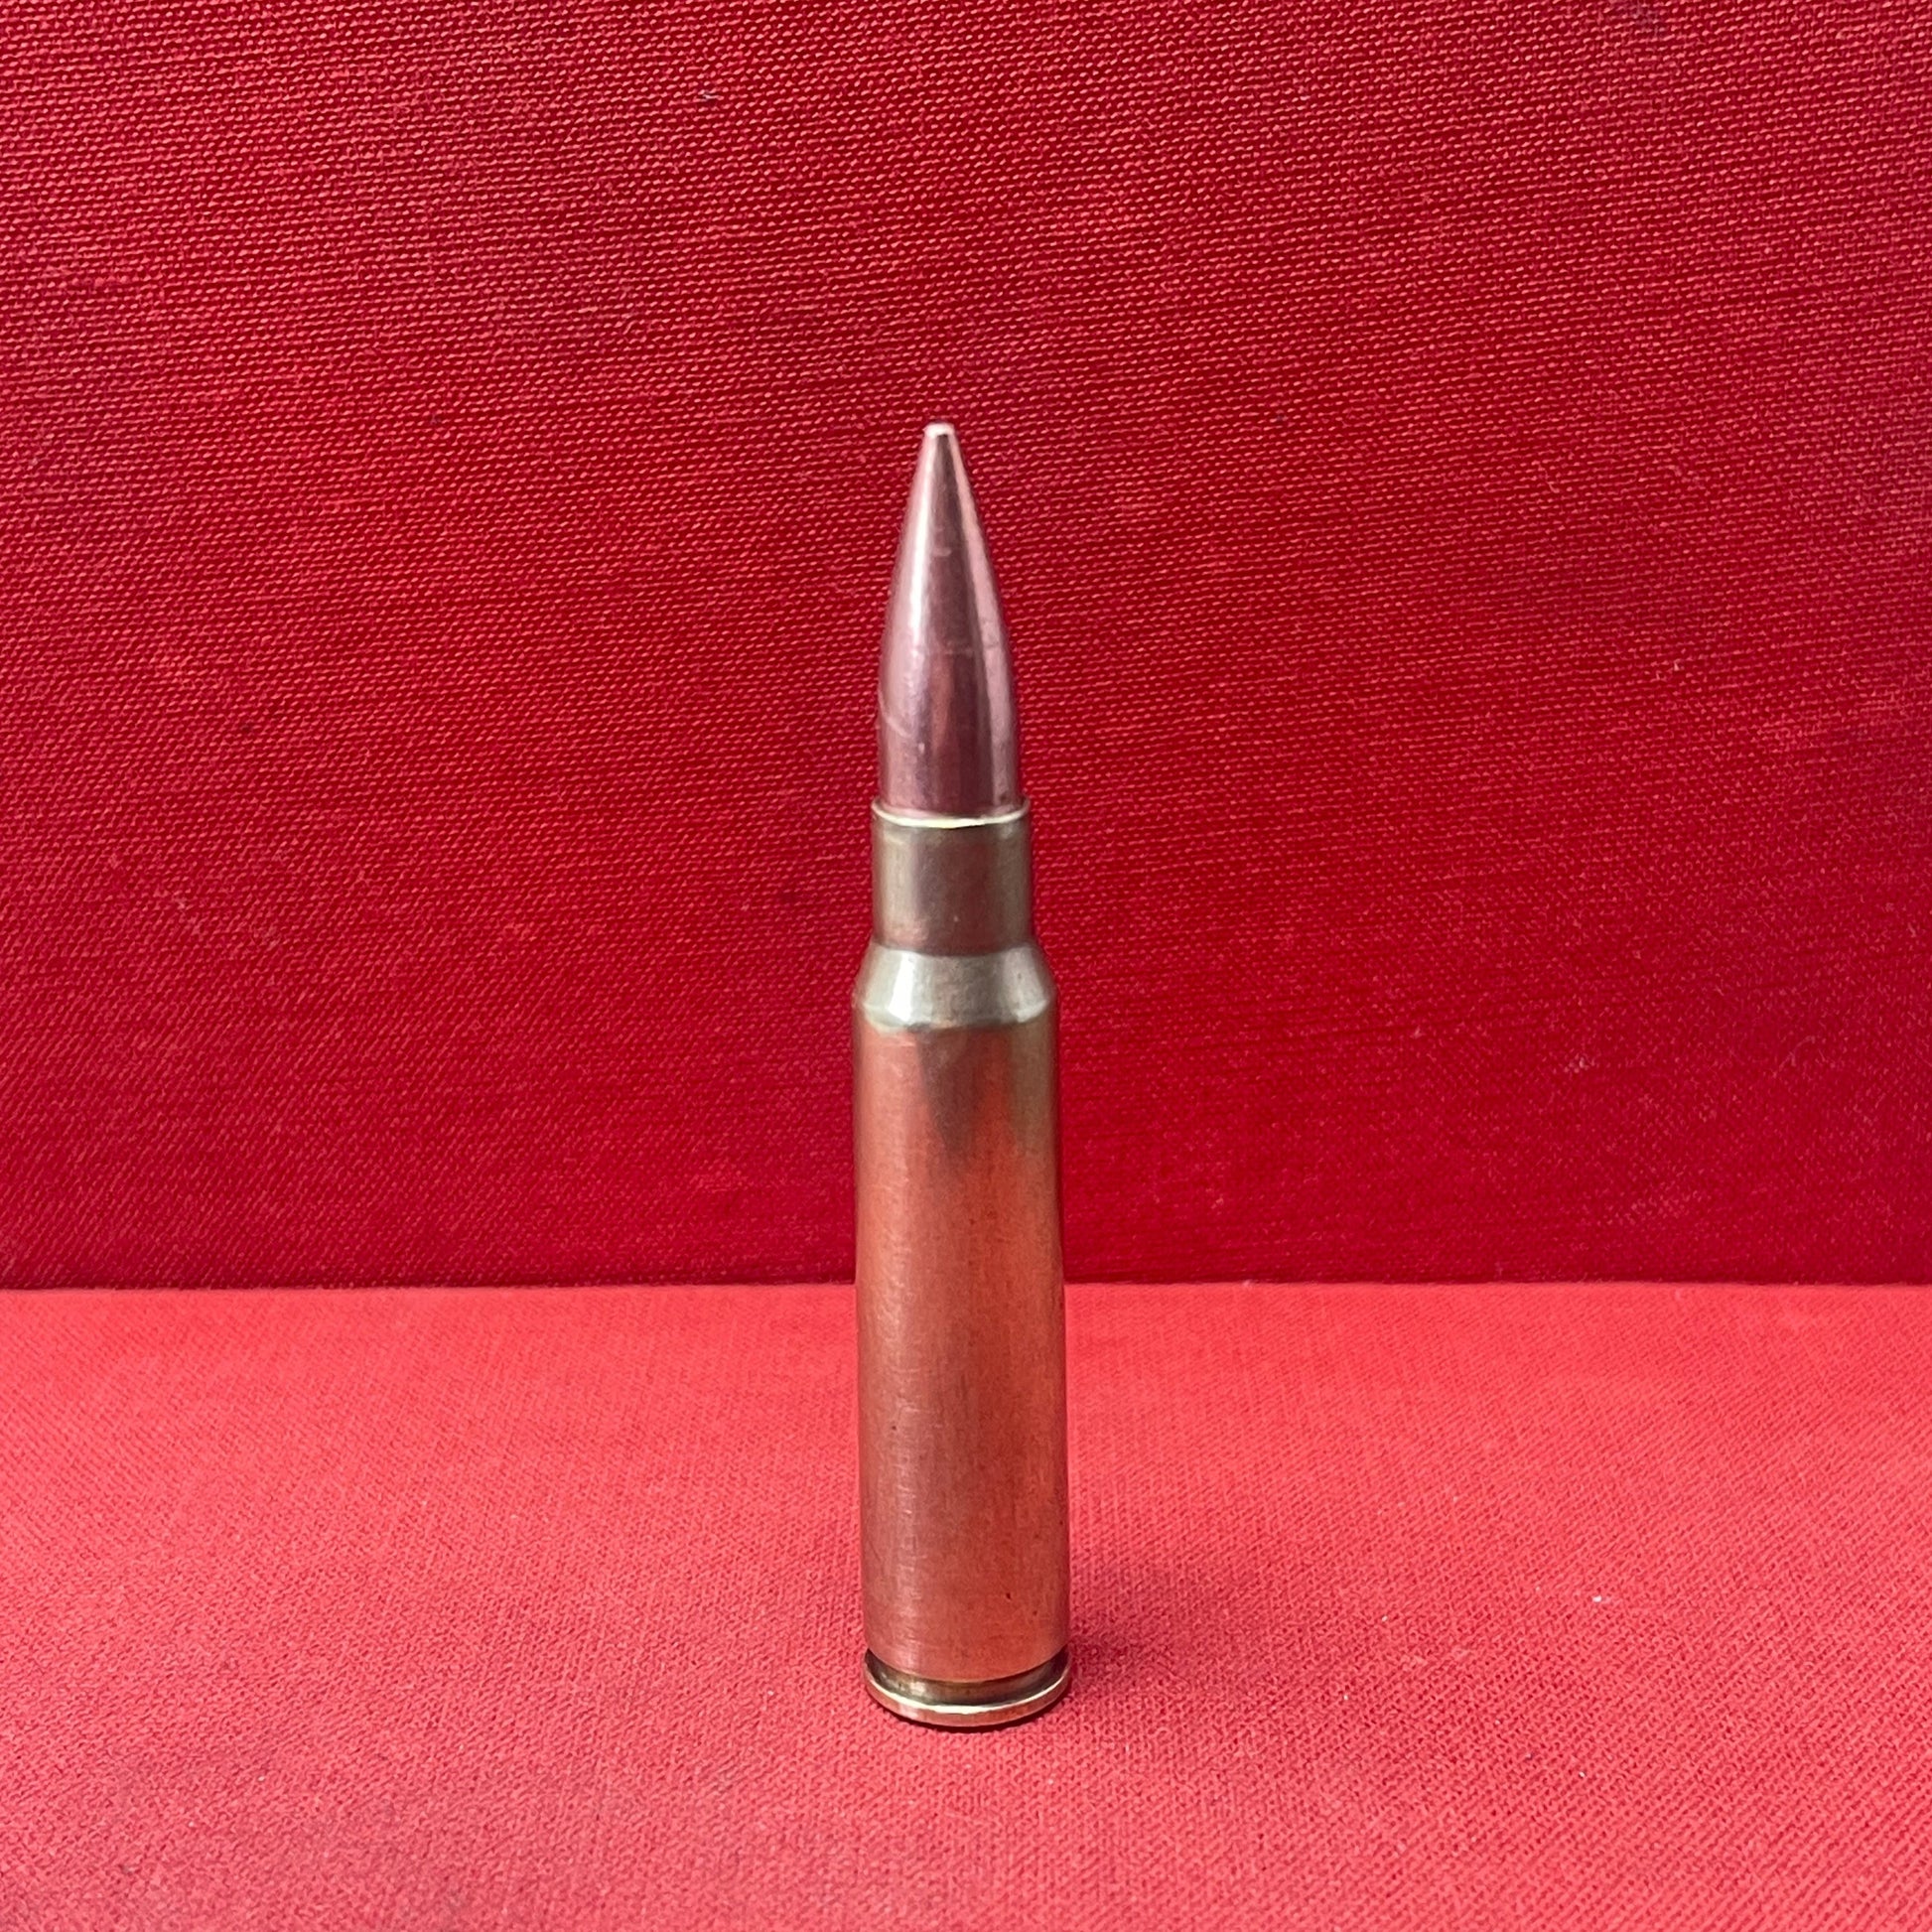 French 7.5mm MAS Modele 49/56 INERT Brass Cartridge